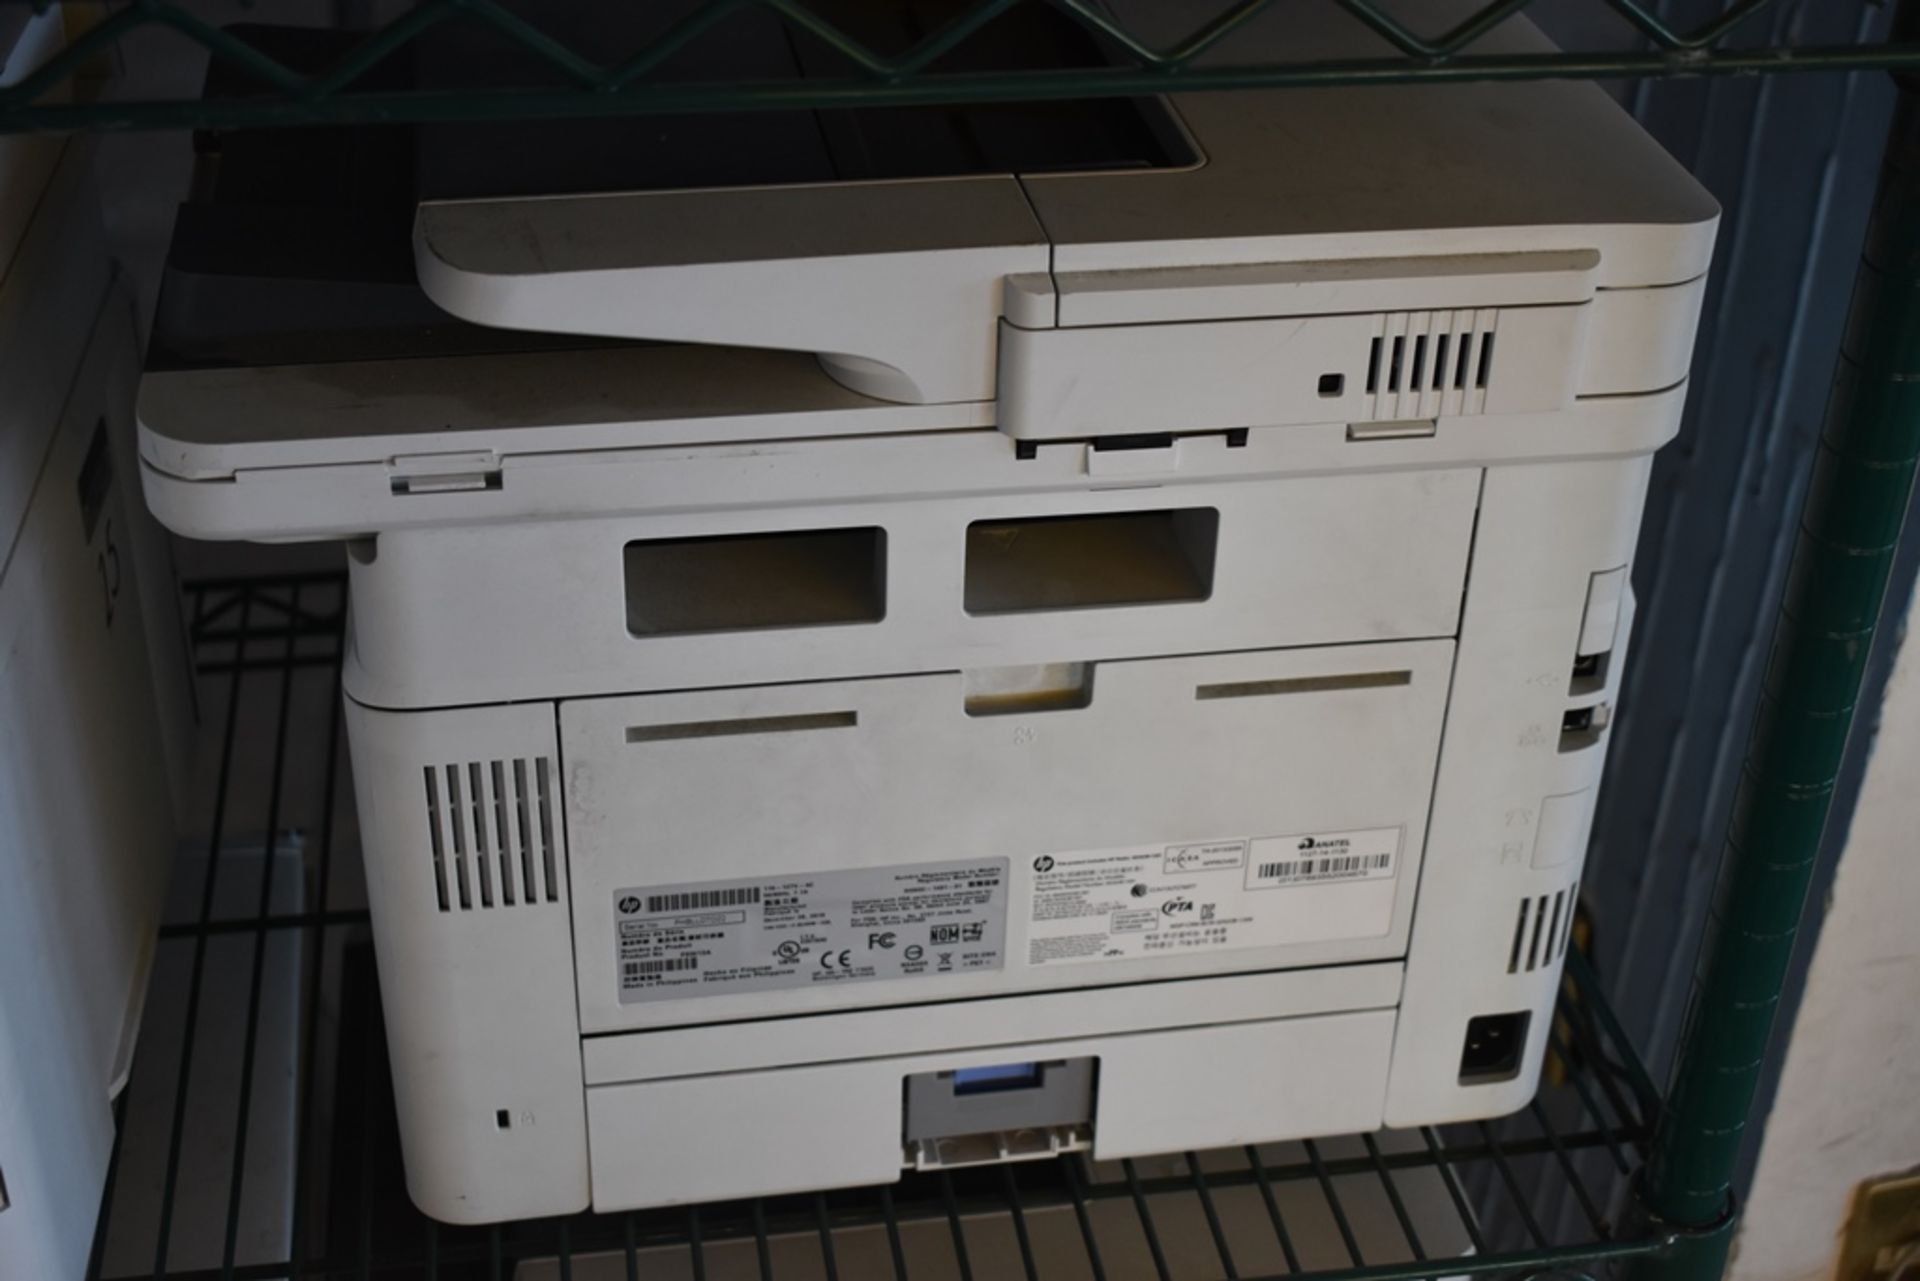 3 impresoras multifuncional marca HP, Modelo: LaserJet Pro MFP M426fdw - Image 9 of 21